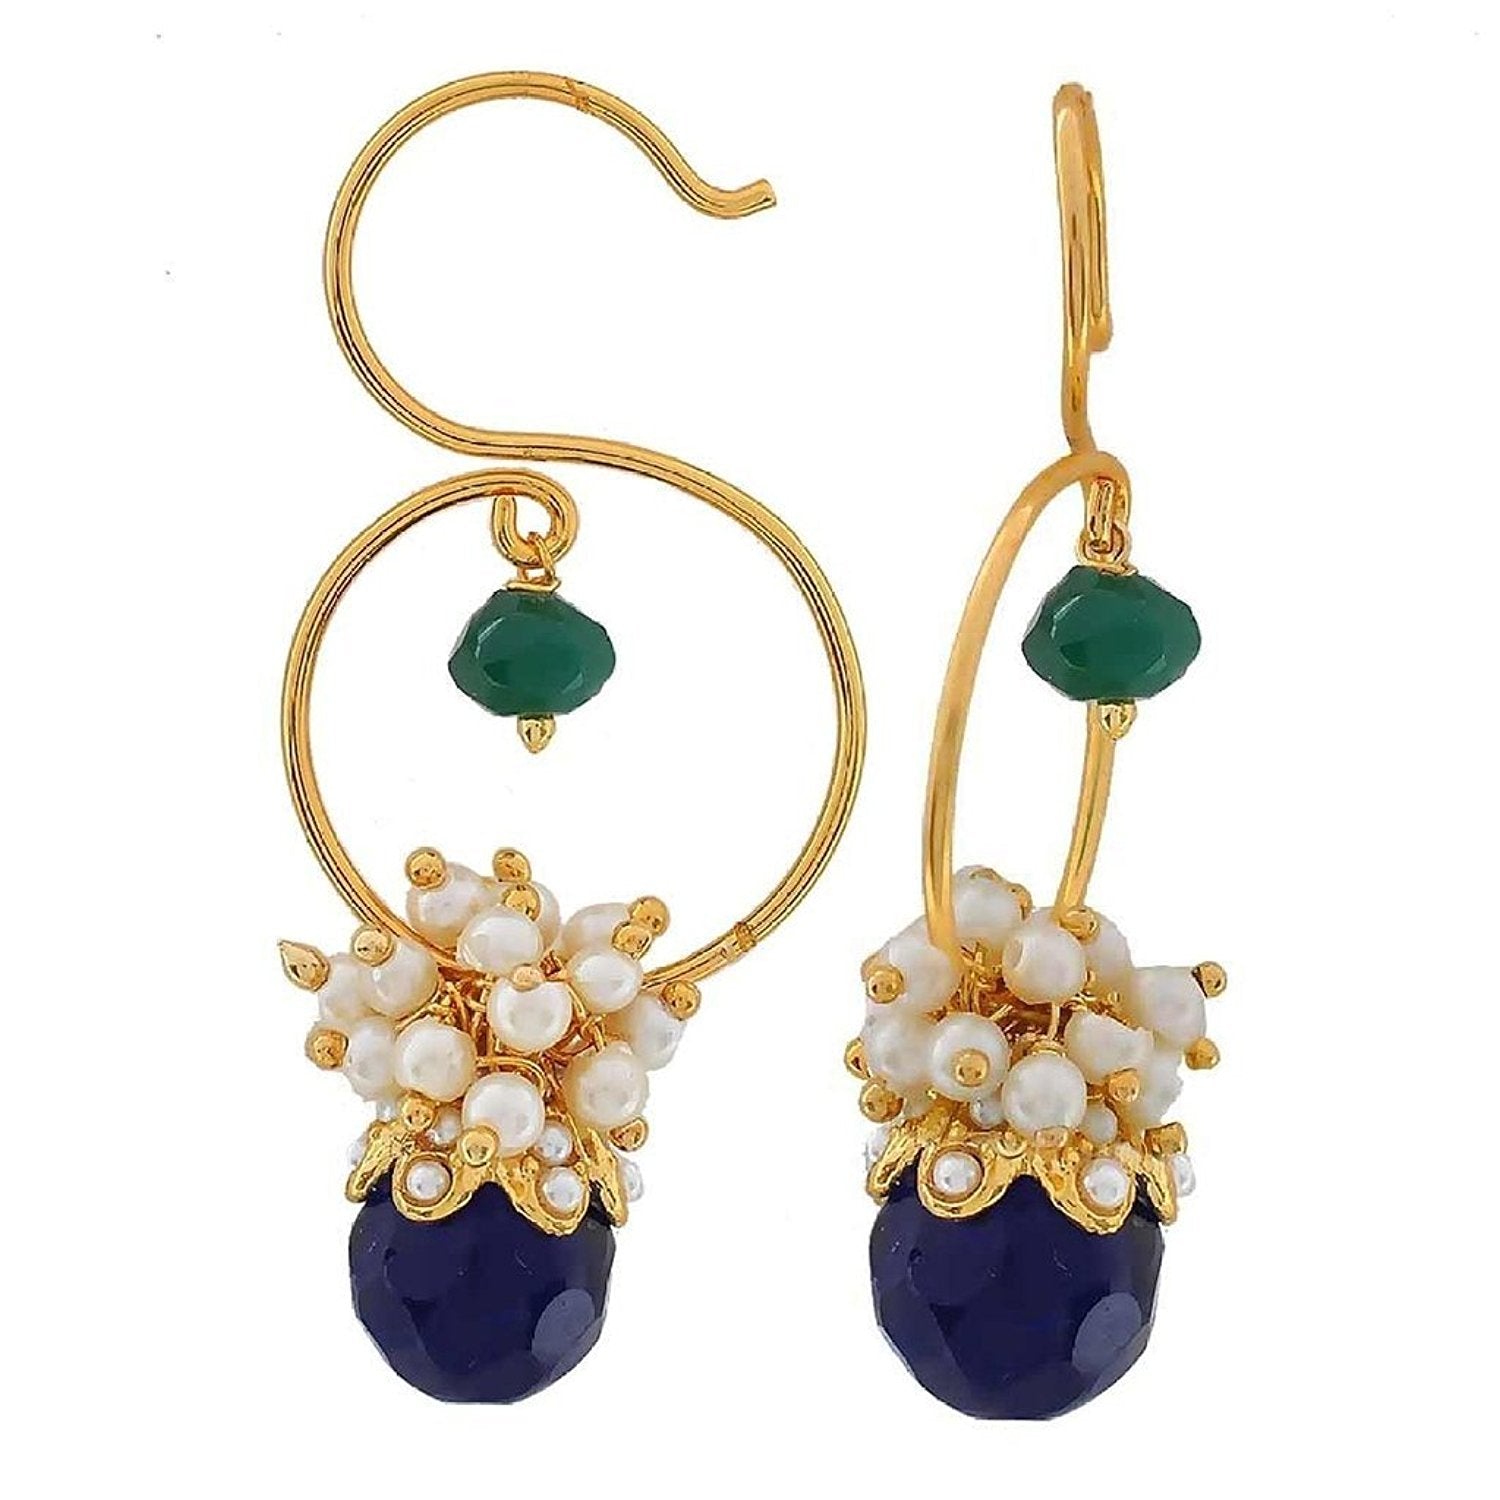 18K Gold Plated Blue Green Pearl Dangling Earrings For Women